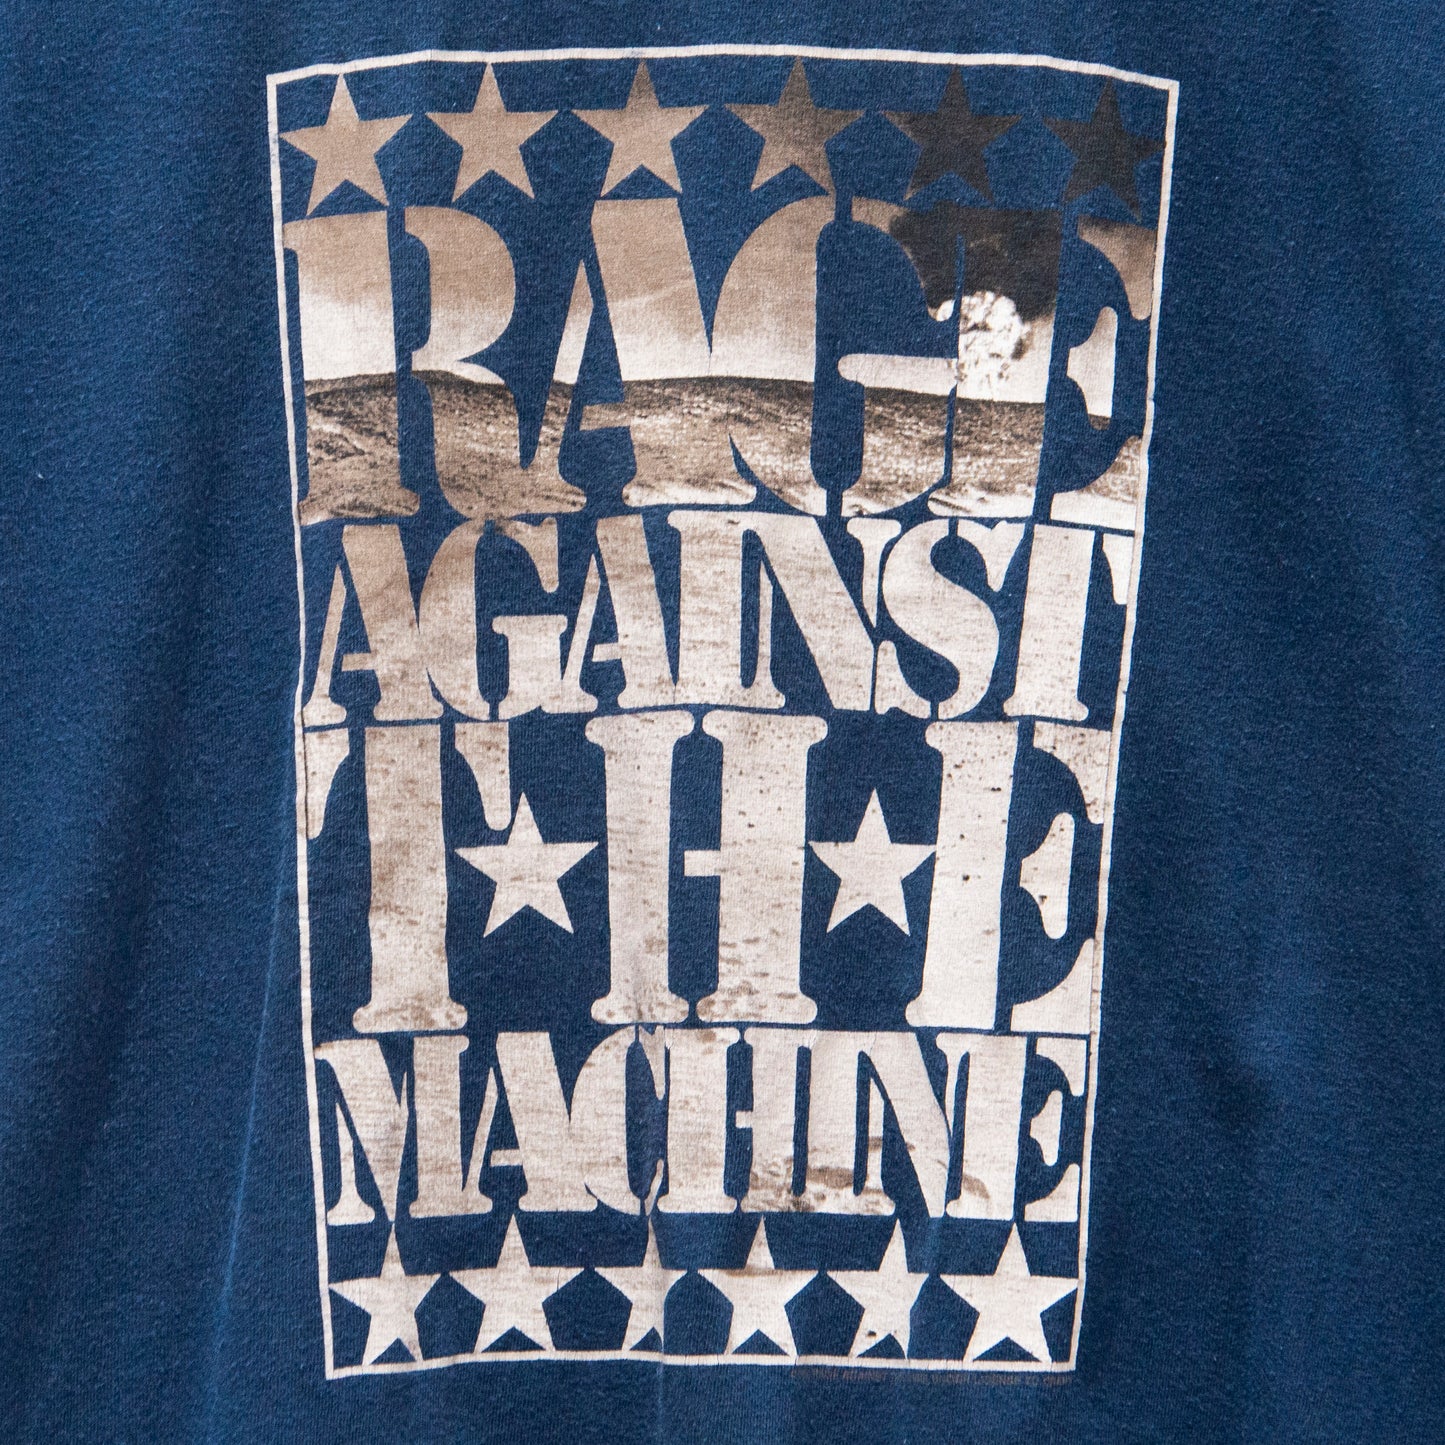 2000 Rage Against The Machine T-Shirt XL